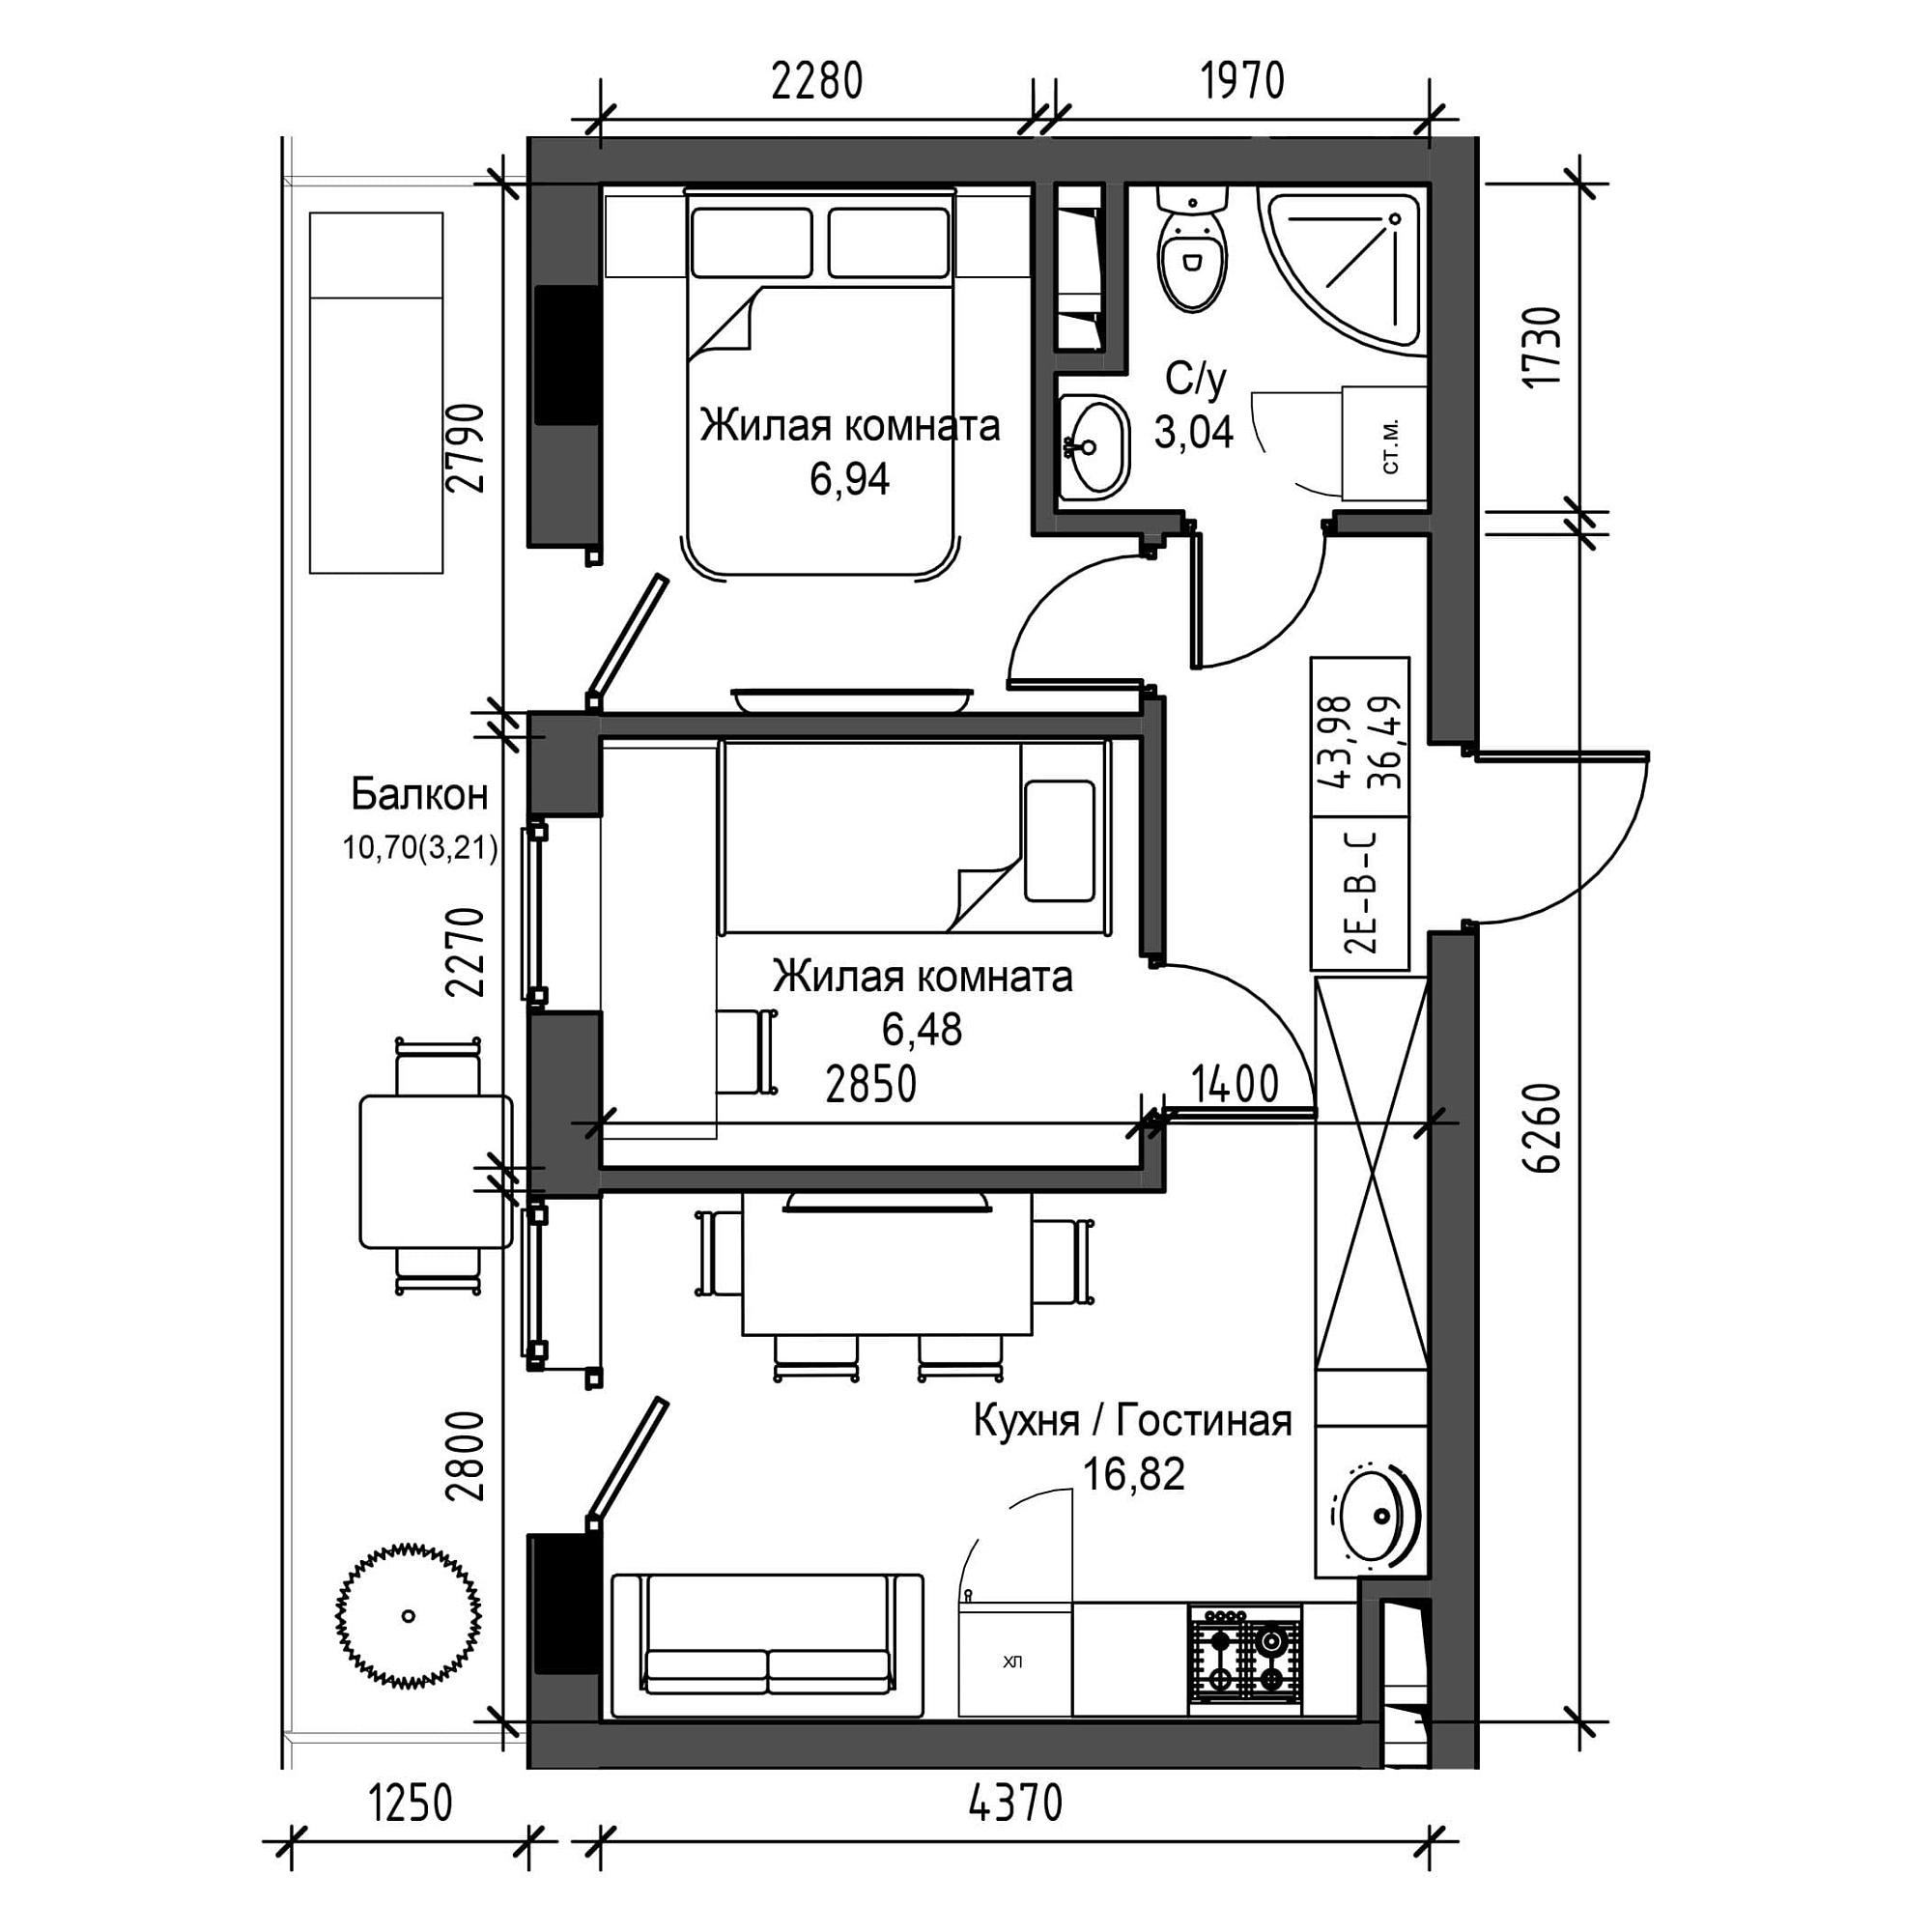 Планування 2-к квартира площею 36.49м2, UM-001-05/0017.